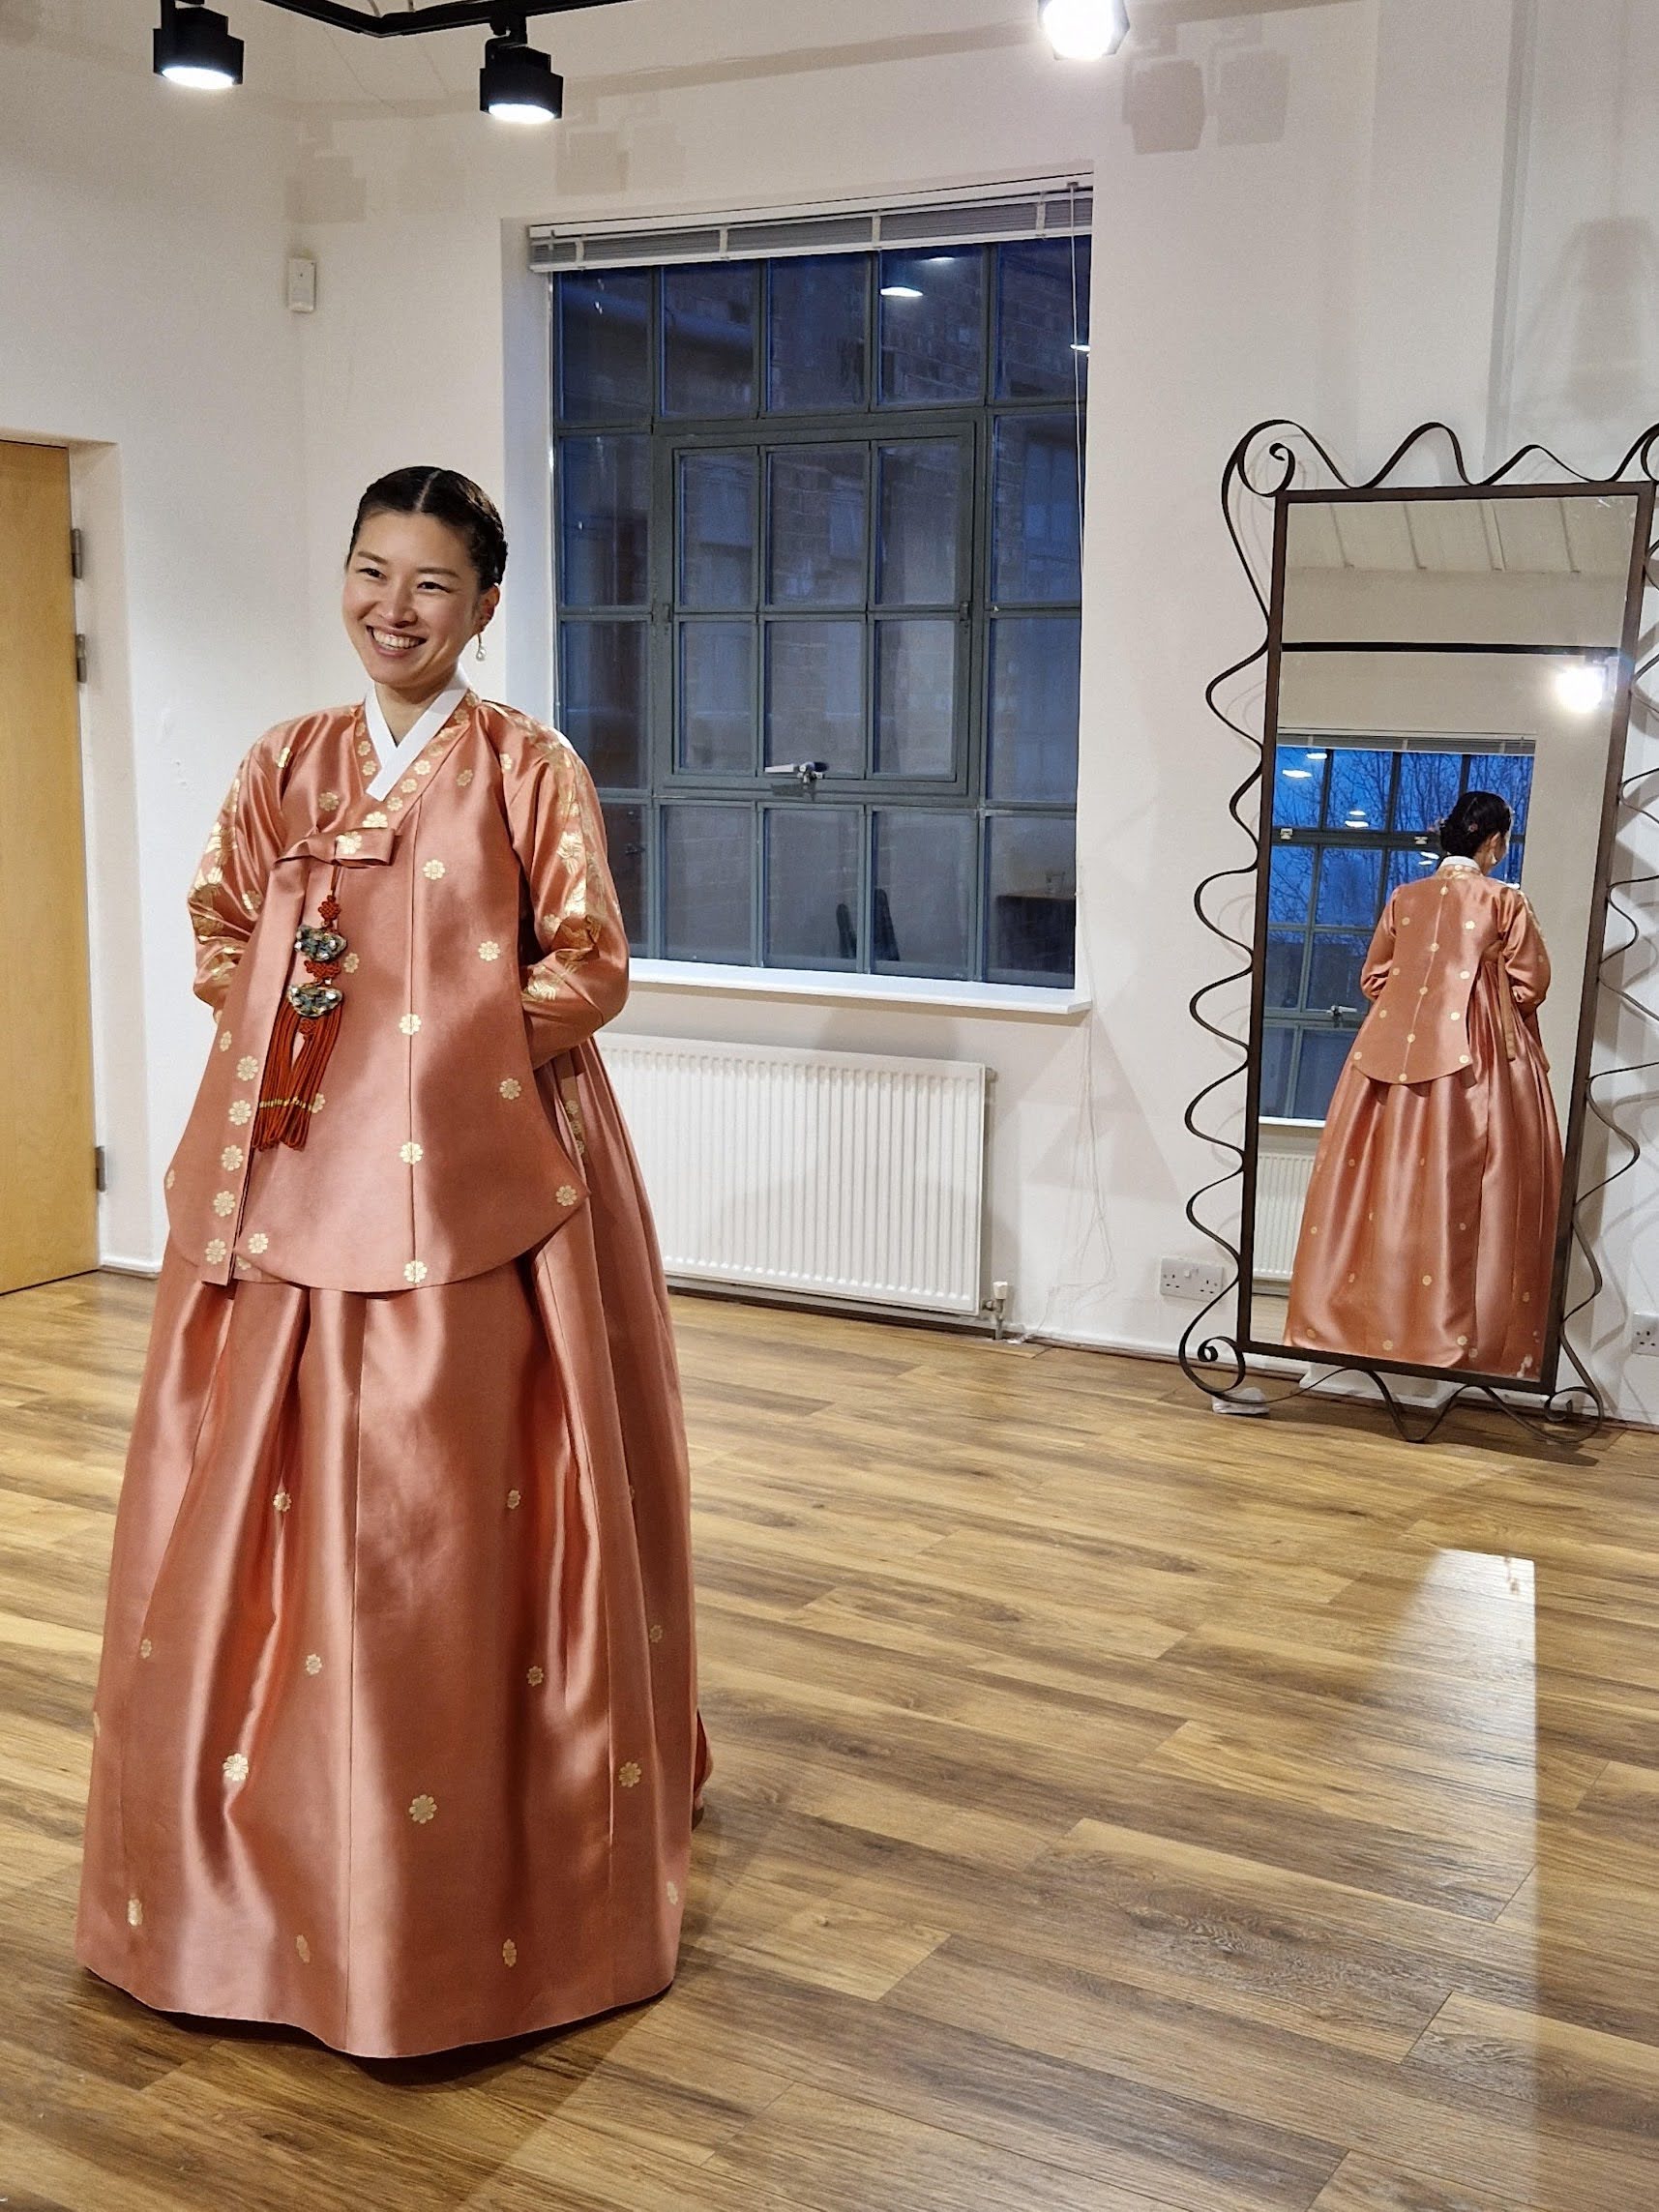 ‘I felt surrounded by Korean love’: Regina Pyo orders traditional silk hanbok to wear at Buckingham Palace